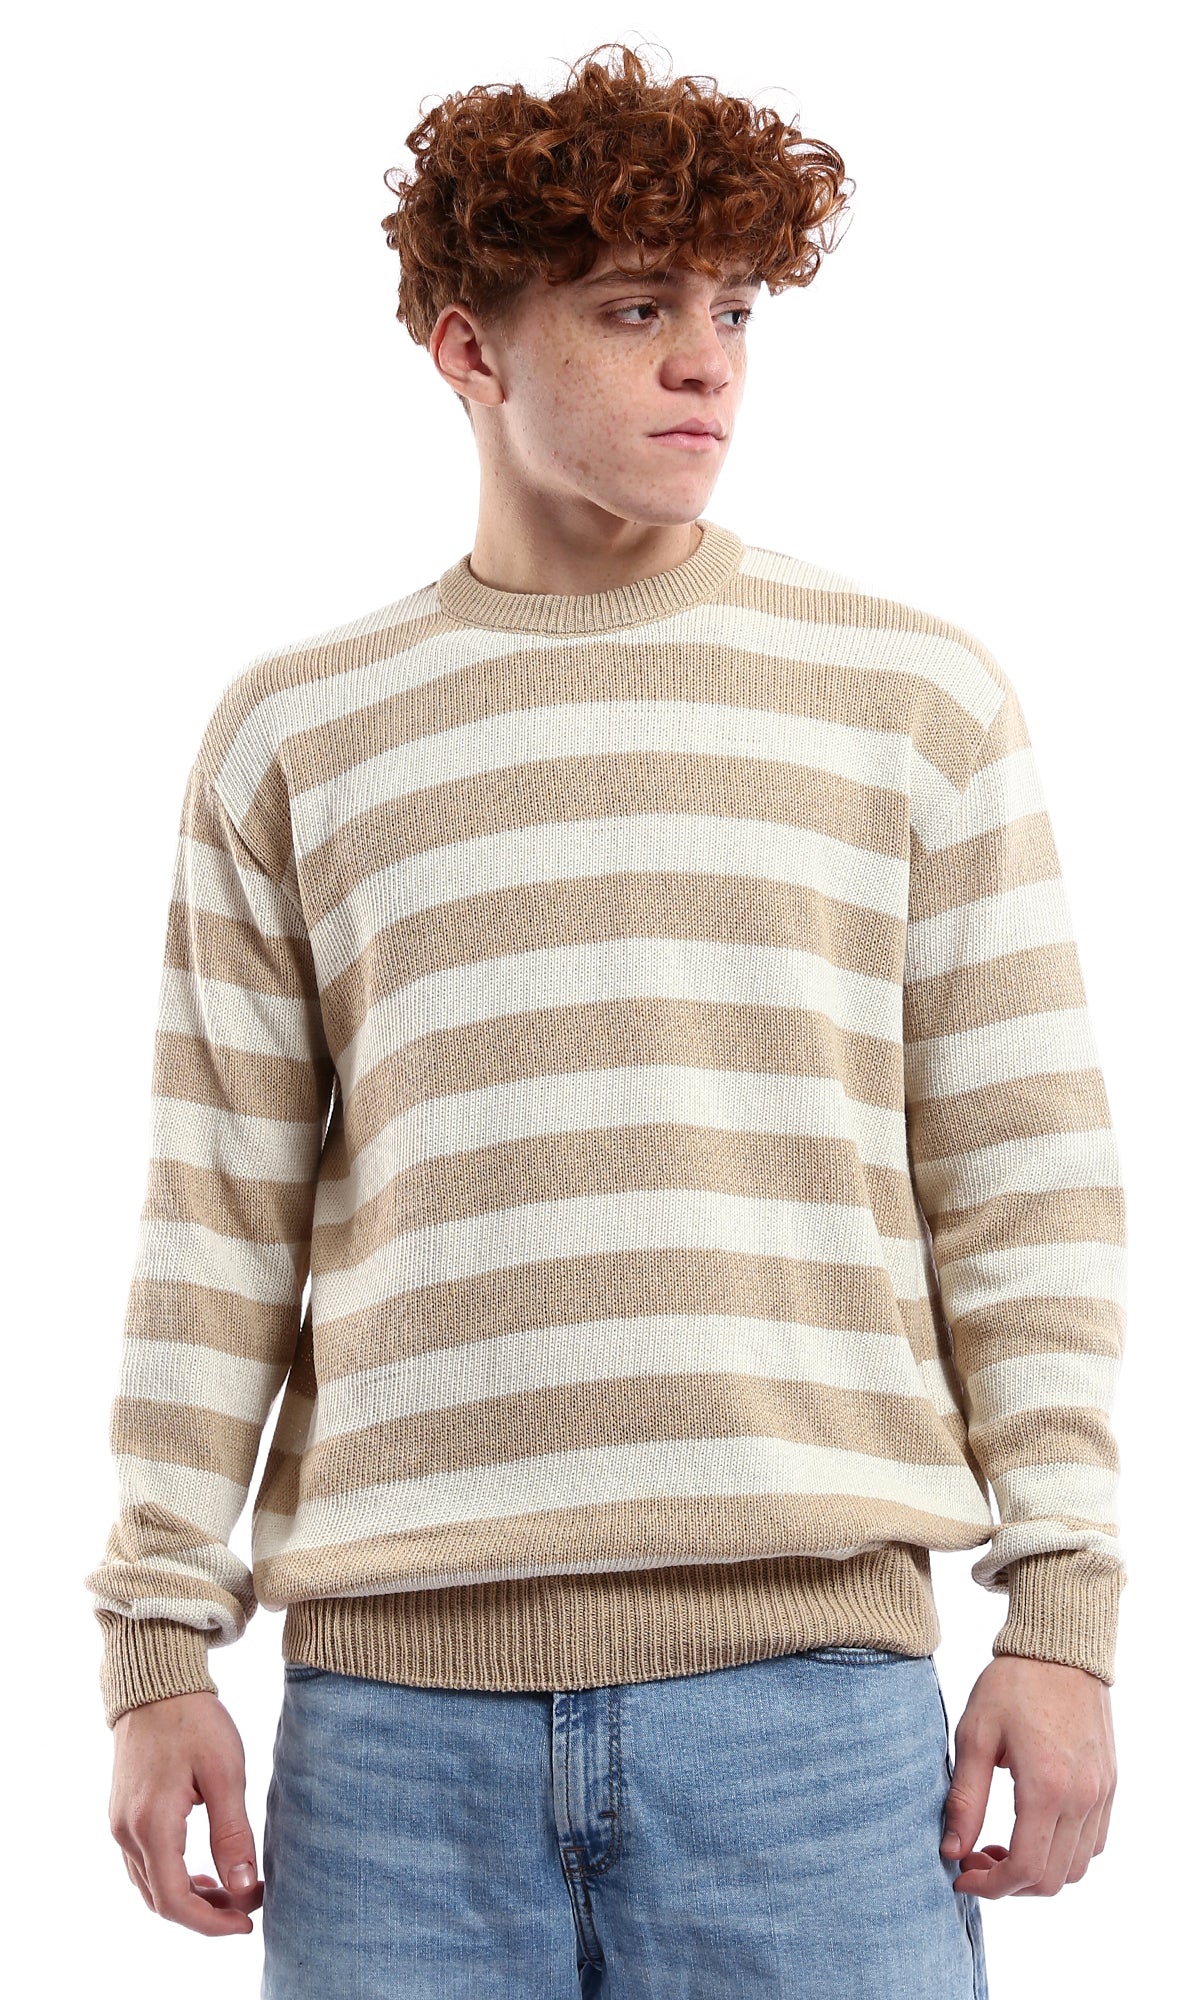 O174209 Striped Beige & Mocha Slip On Knitted Pullover